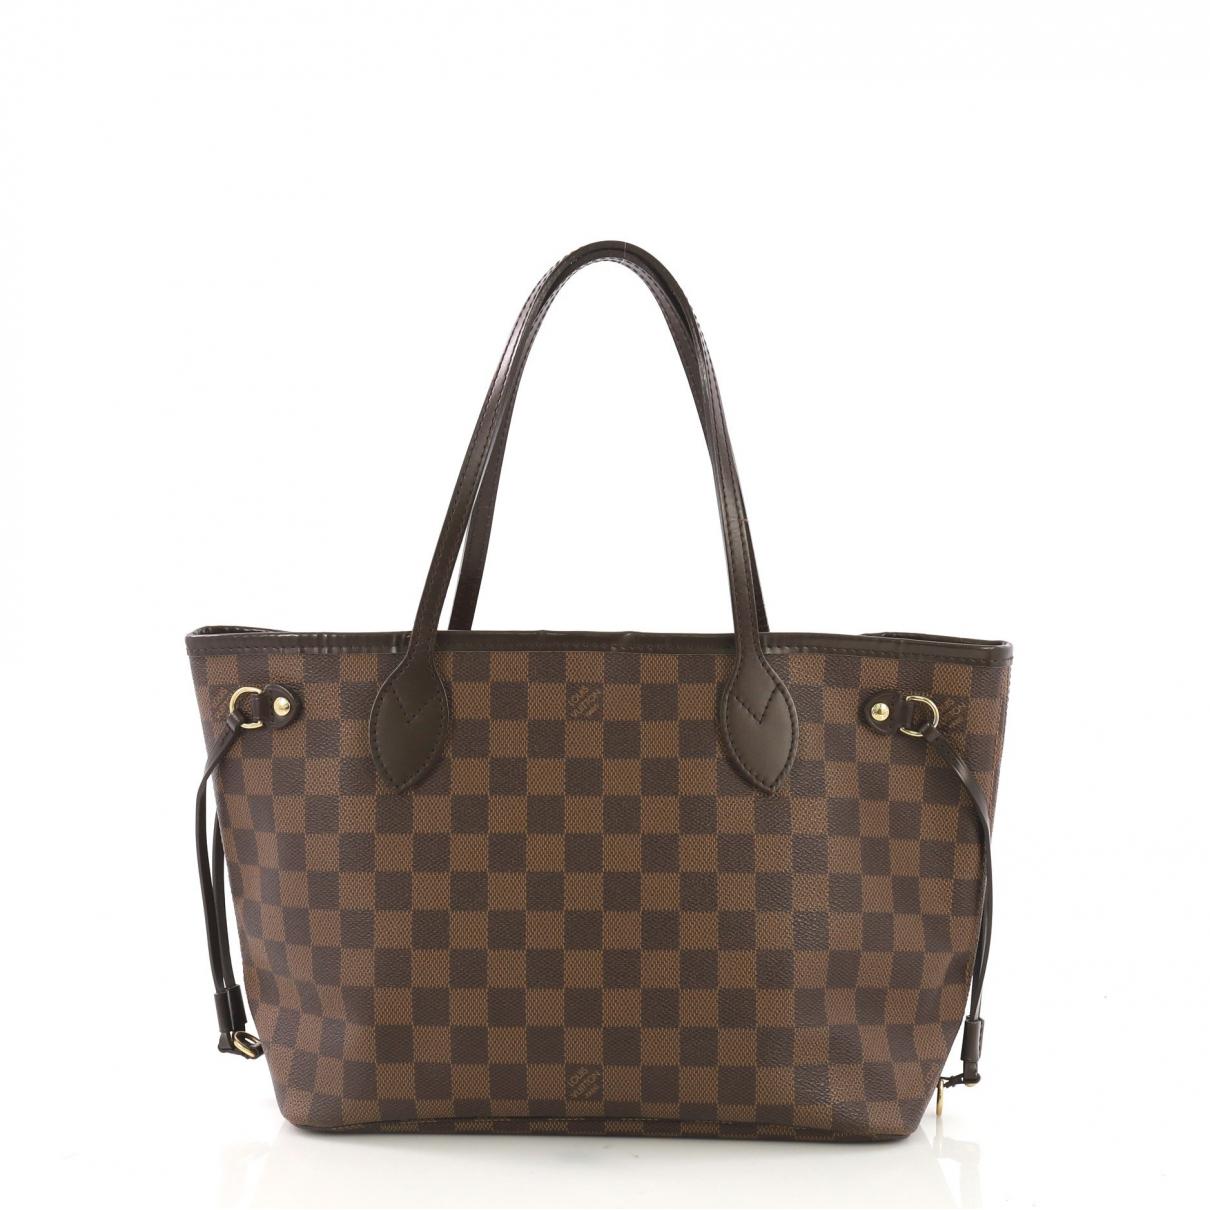 Lyst - Louis Vuitton Neverfull Brown Cloth Handbag in Brown - Save 29%